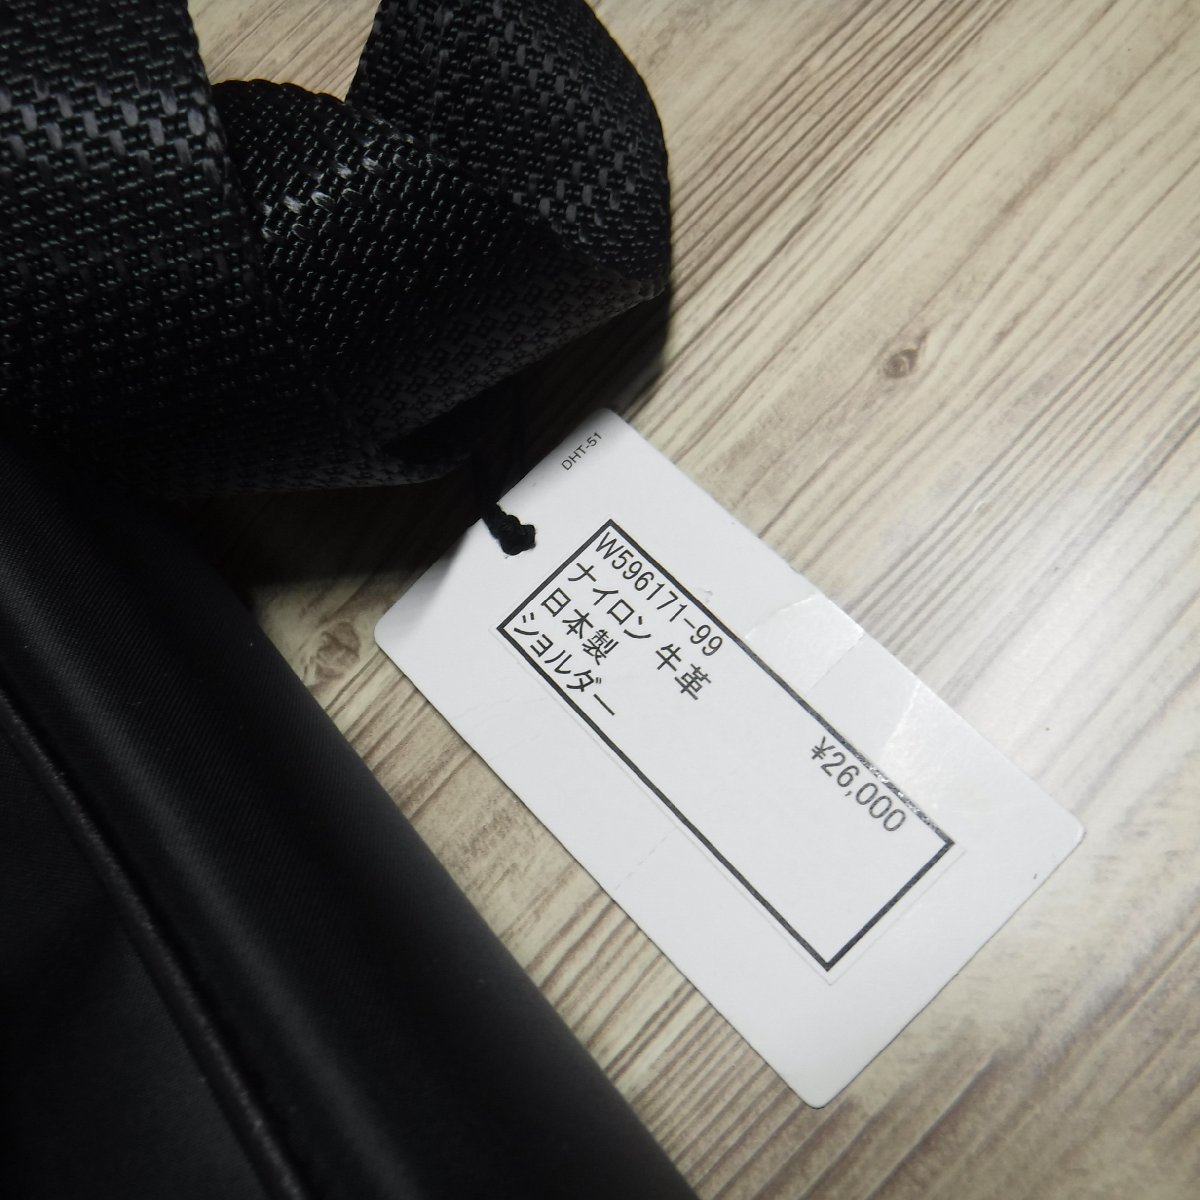 BB370 ダーバン 定価26000円 日本製新品 黒 ビジネスショルダーバッグ A4ファイル収納サイズ D'URBAN オンオフ兼用_画像8